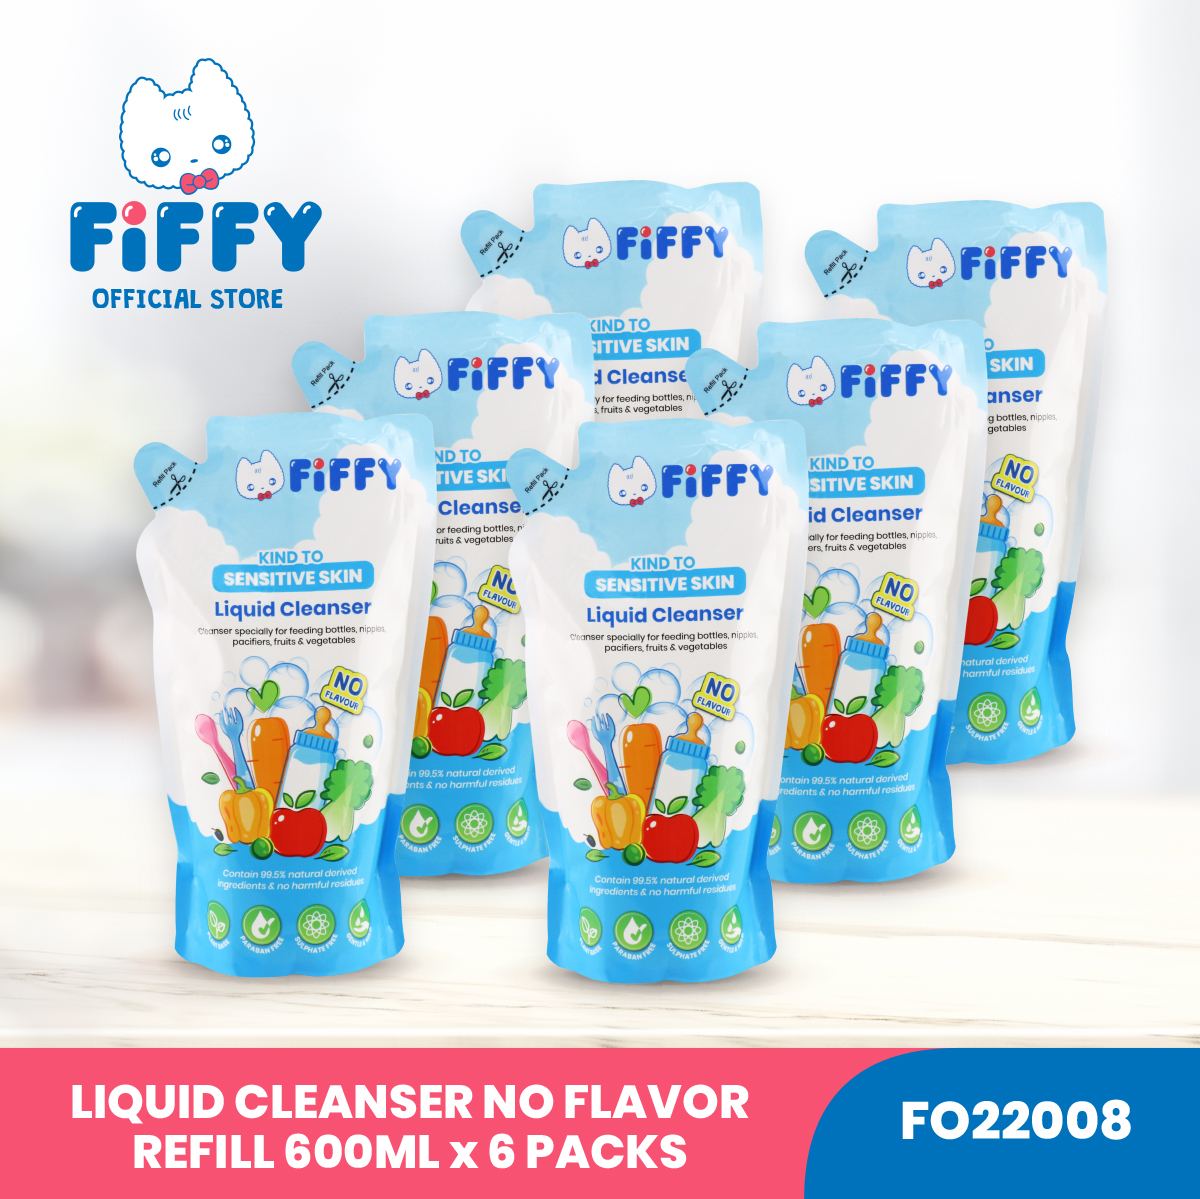 FIFFY LIQUID CLEANSER NO FLV REFILL * 6 - FO22008